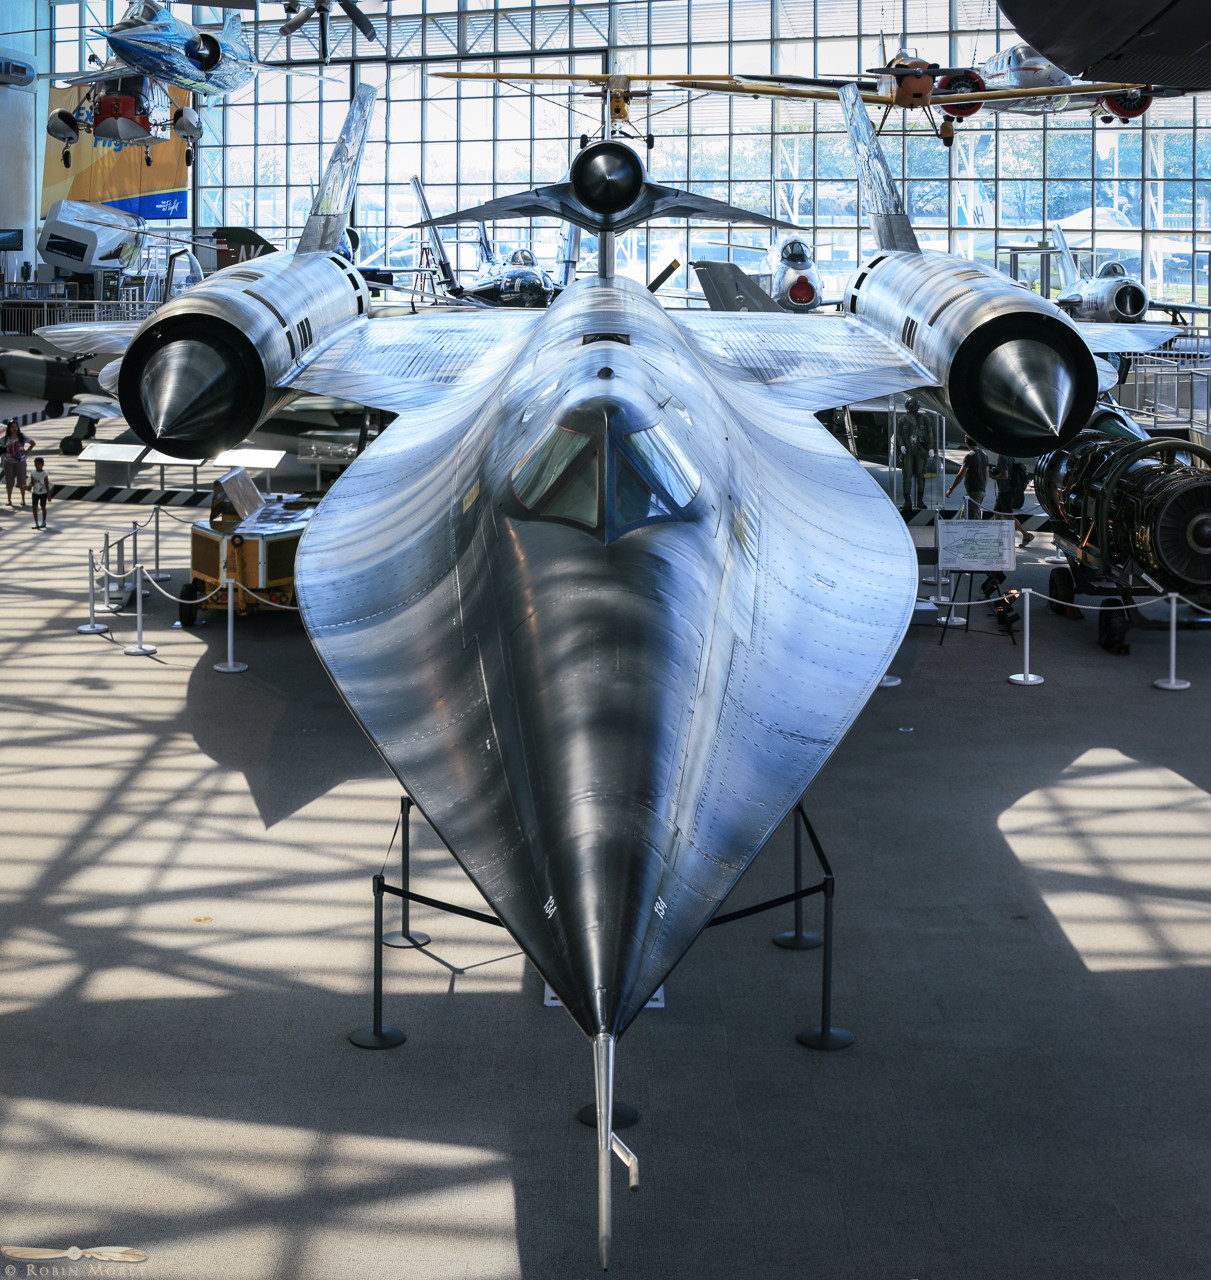 2013, 60-6940, Art134M, Blackbird, D-21, M-21, Museum of Flight, Pano, Seattle, USA, Washington